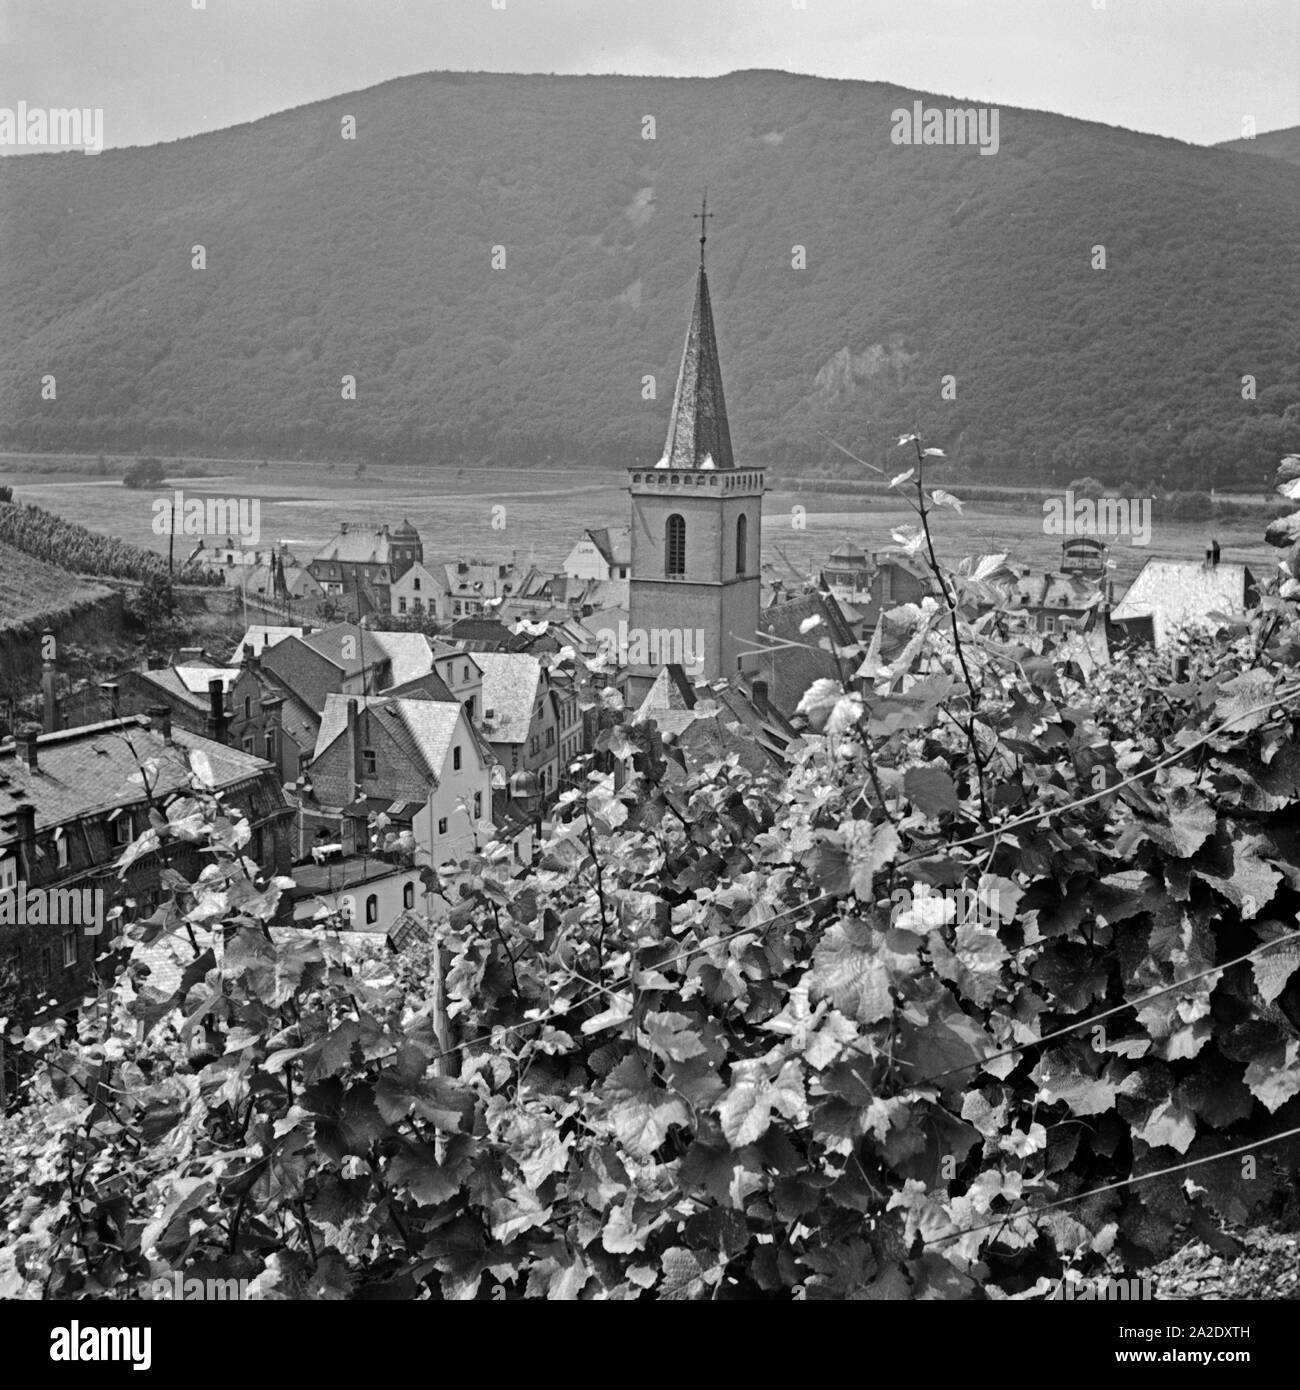 Die Pfarrkirche Heilig Kreuz dans Assmannshausen, Deutschland 1930er Jahre. L'église Sainte Croix à Assmannshausen, Allemagne 1930. Banque D'Images